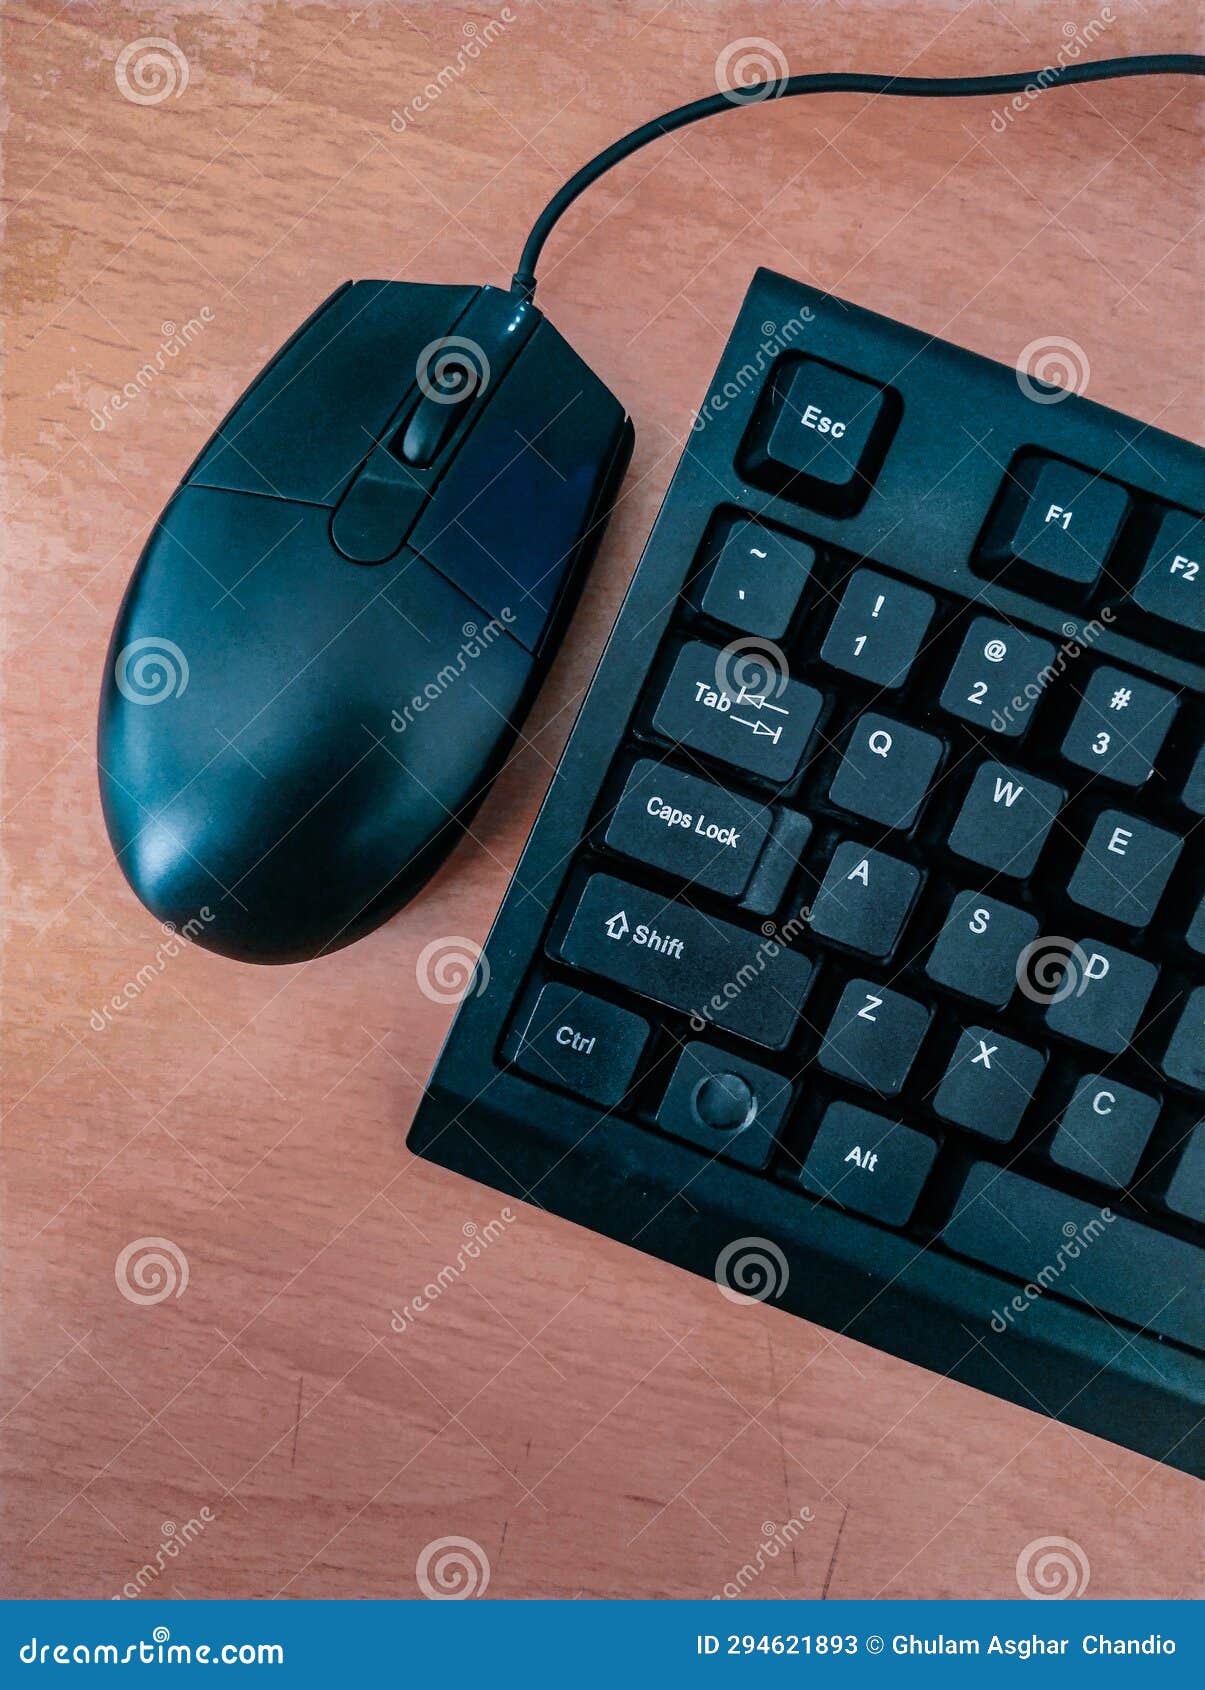 computer keyboard and mouse pc accessories un clavier une souris, teclado m  image teclar digitar photo